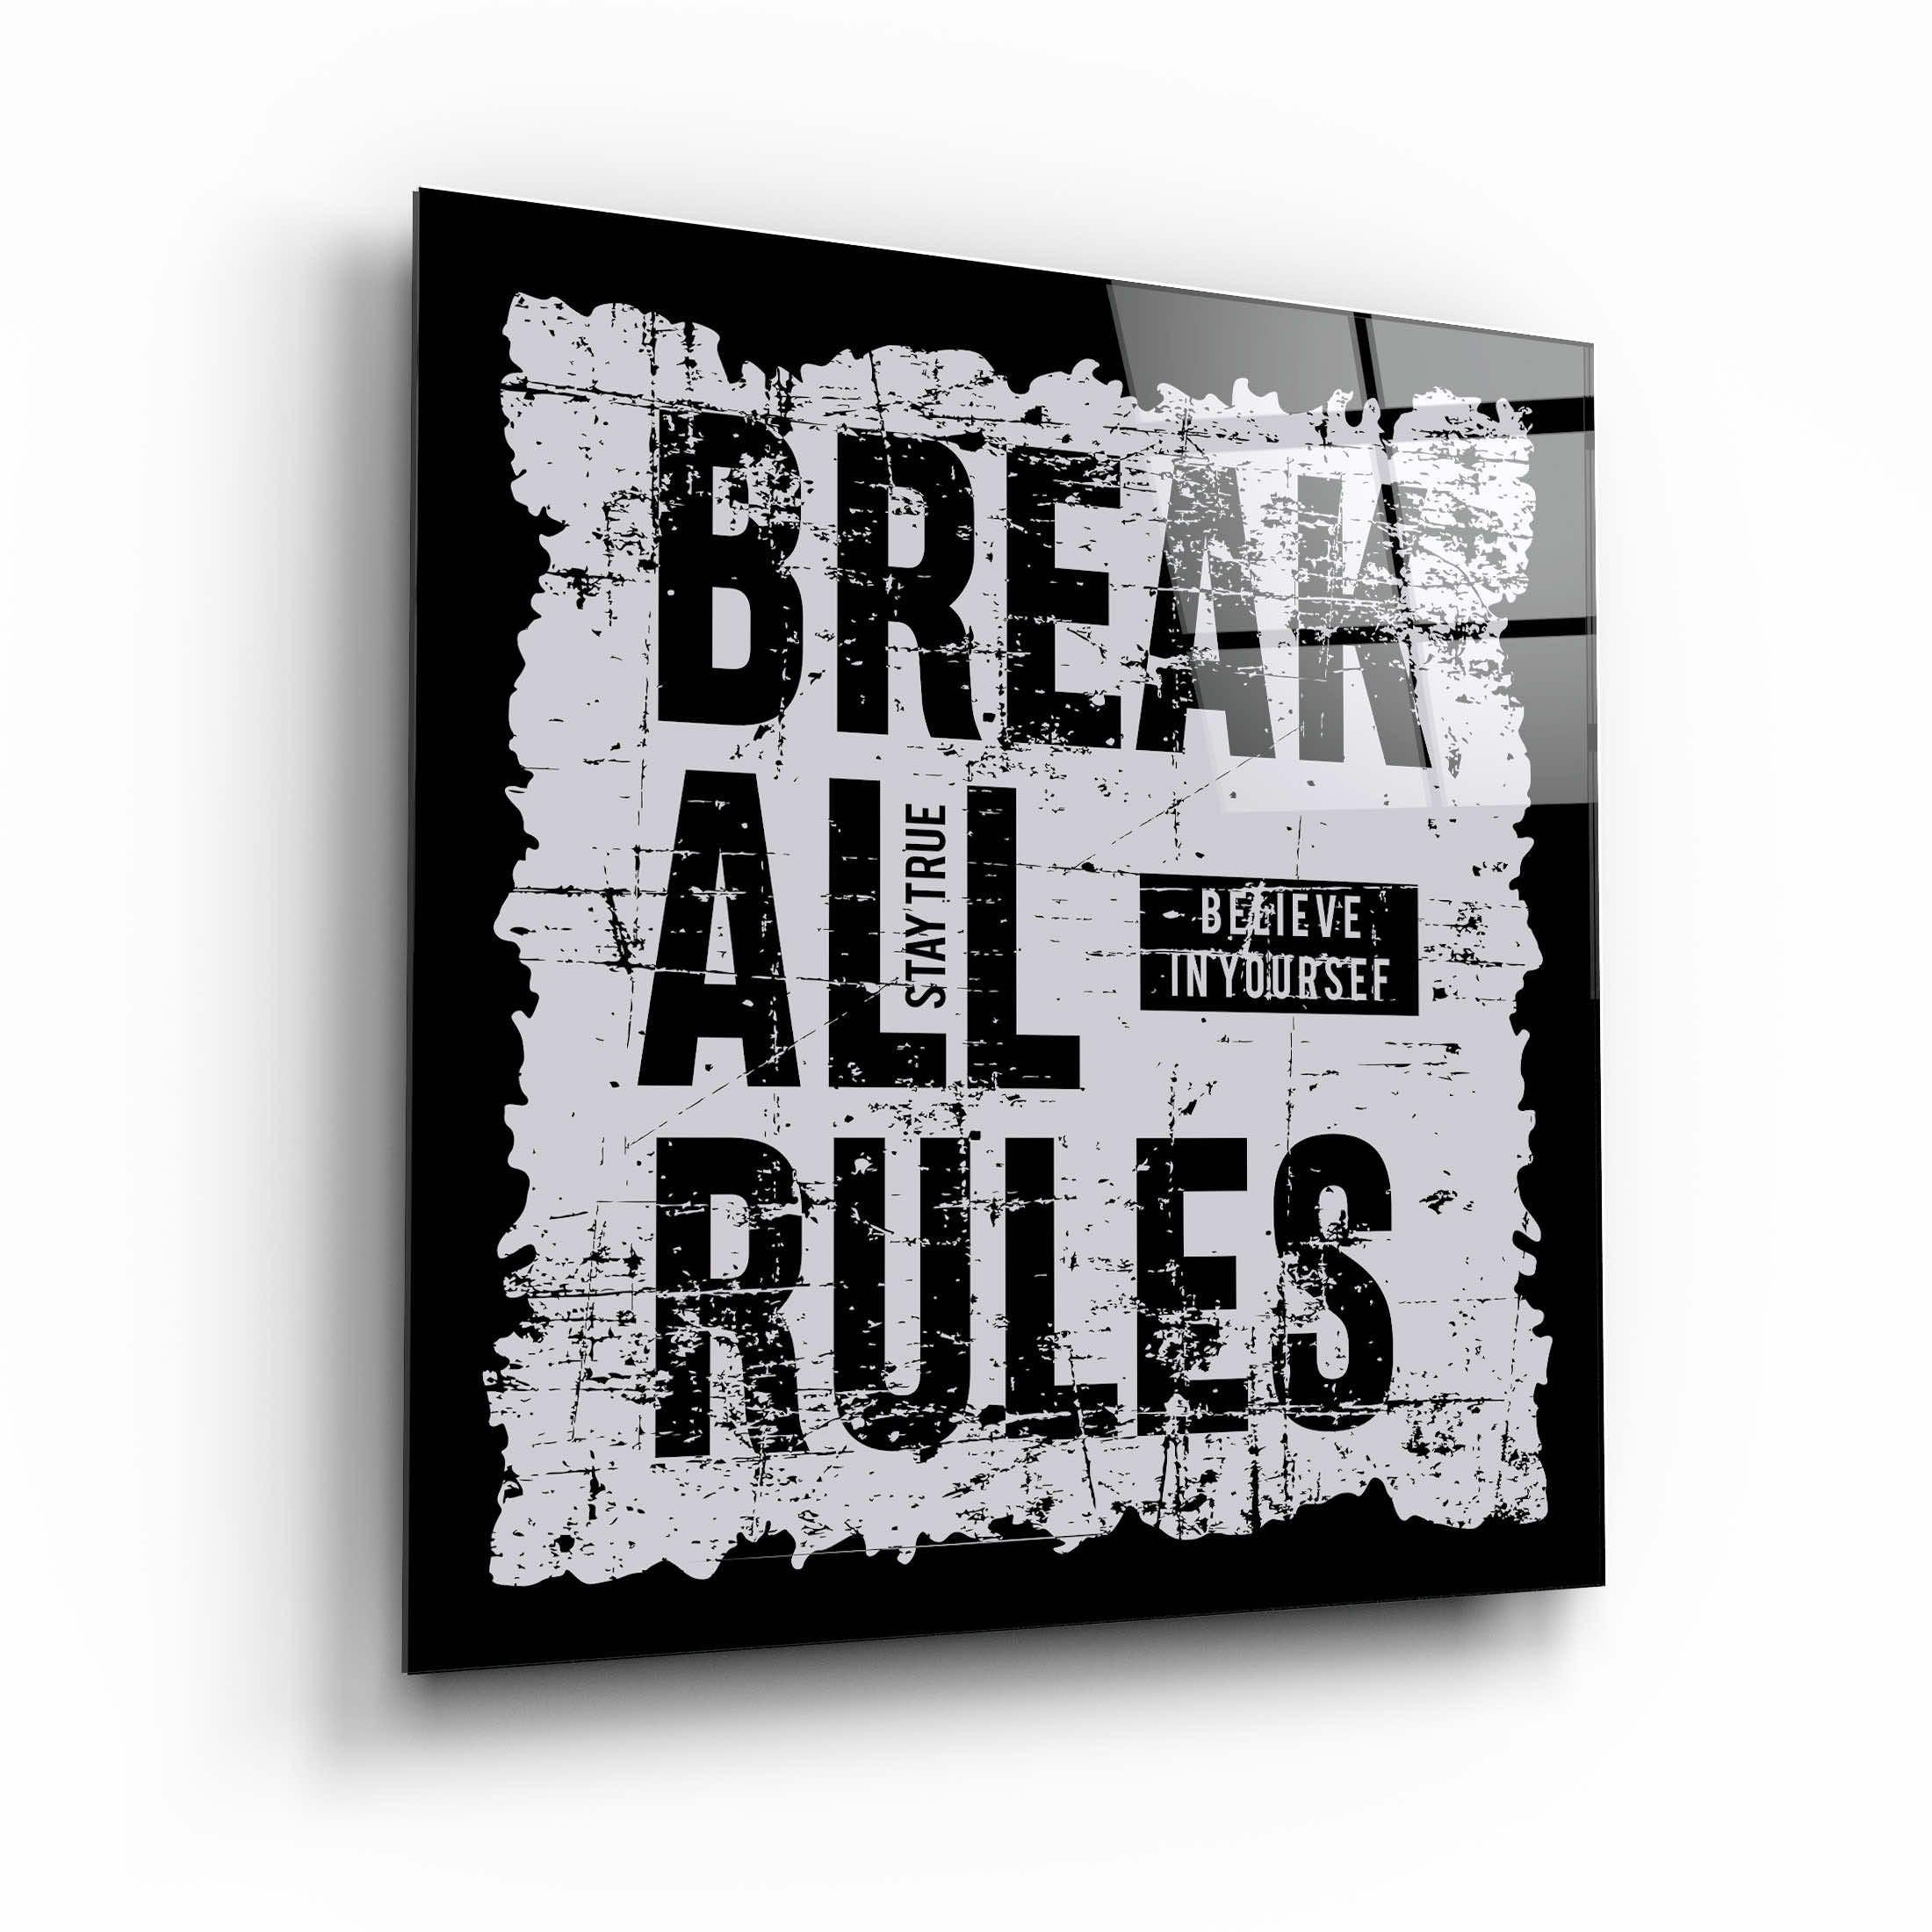 ."Brake All Rules". Motivational Glass Wall Art - ArtDesigna Glass Printing Wall Art